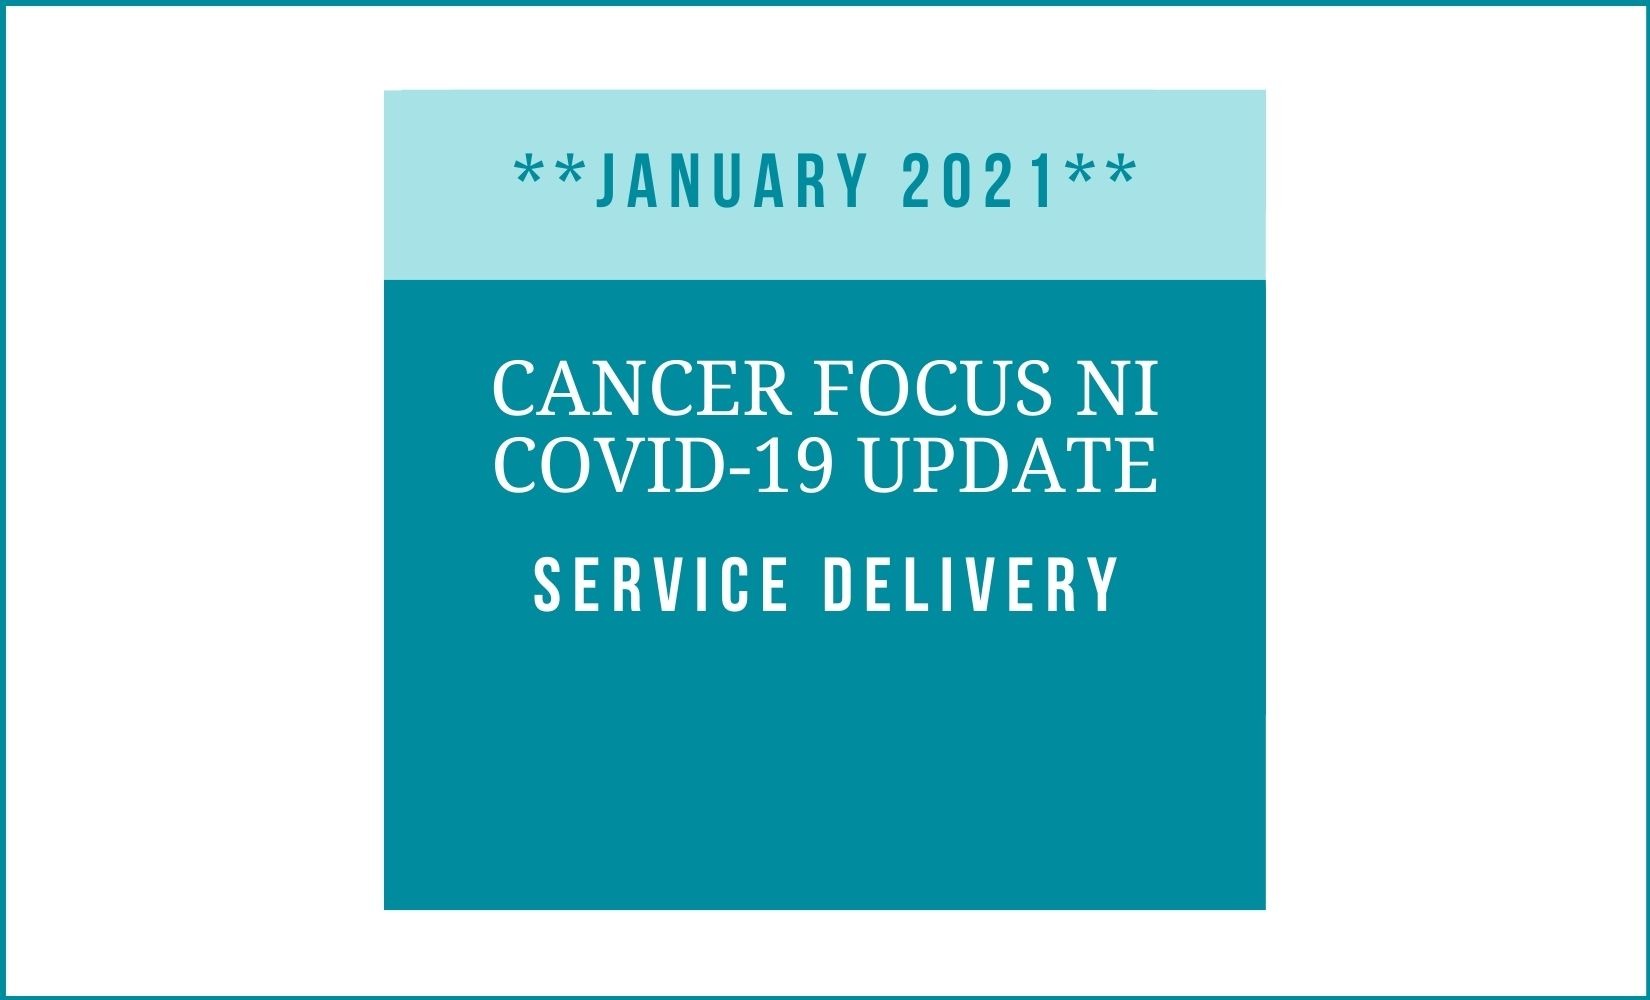 Cancer Focus Ni Services Cancer Focus Northern Ireland